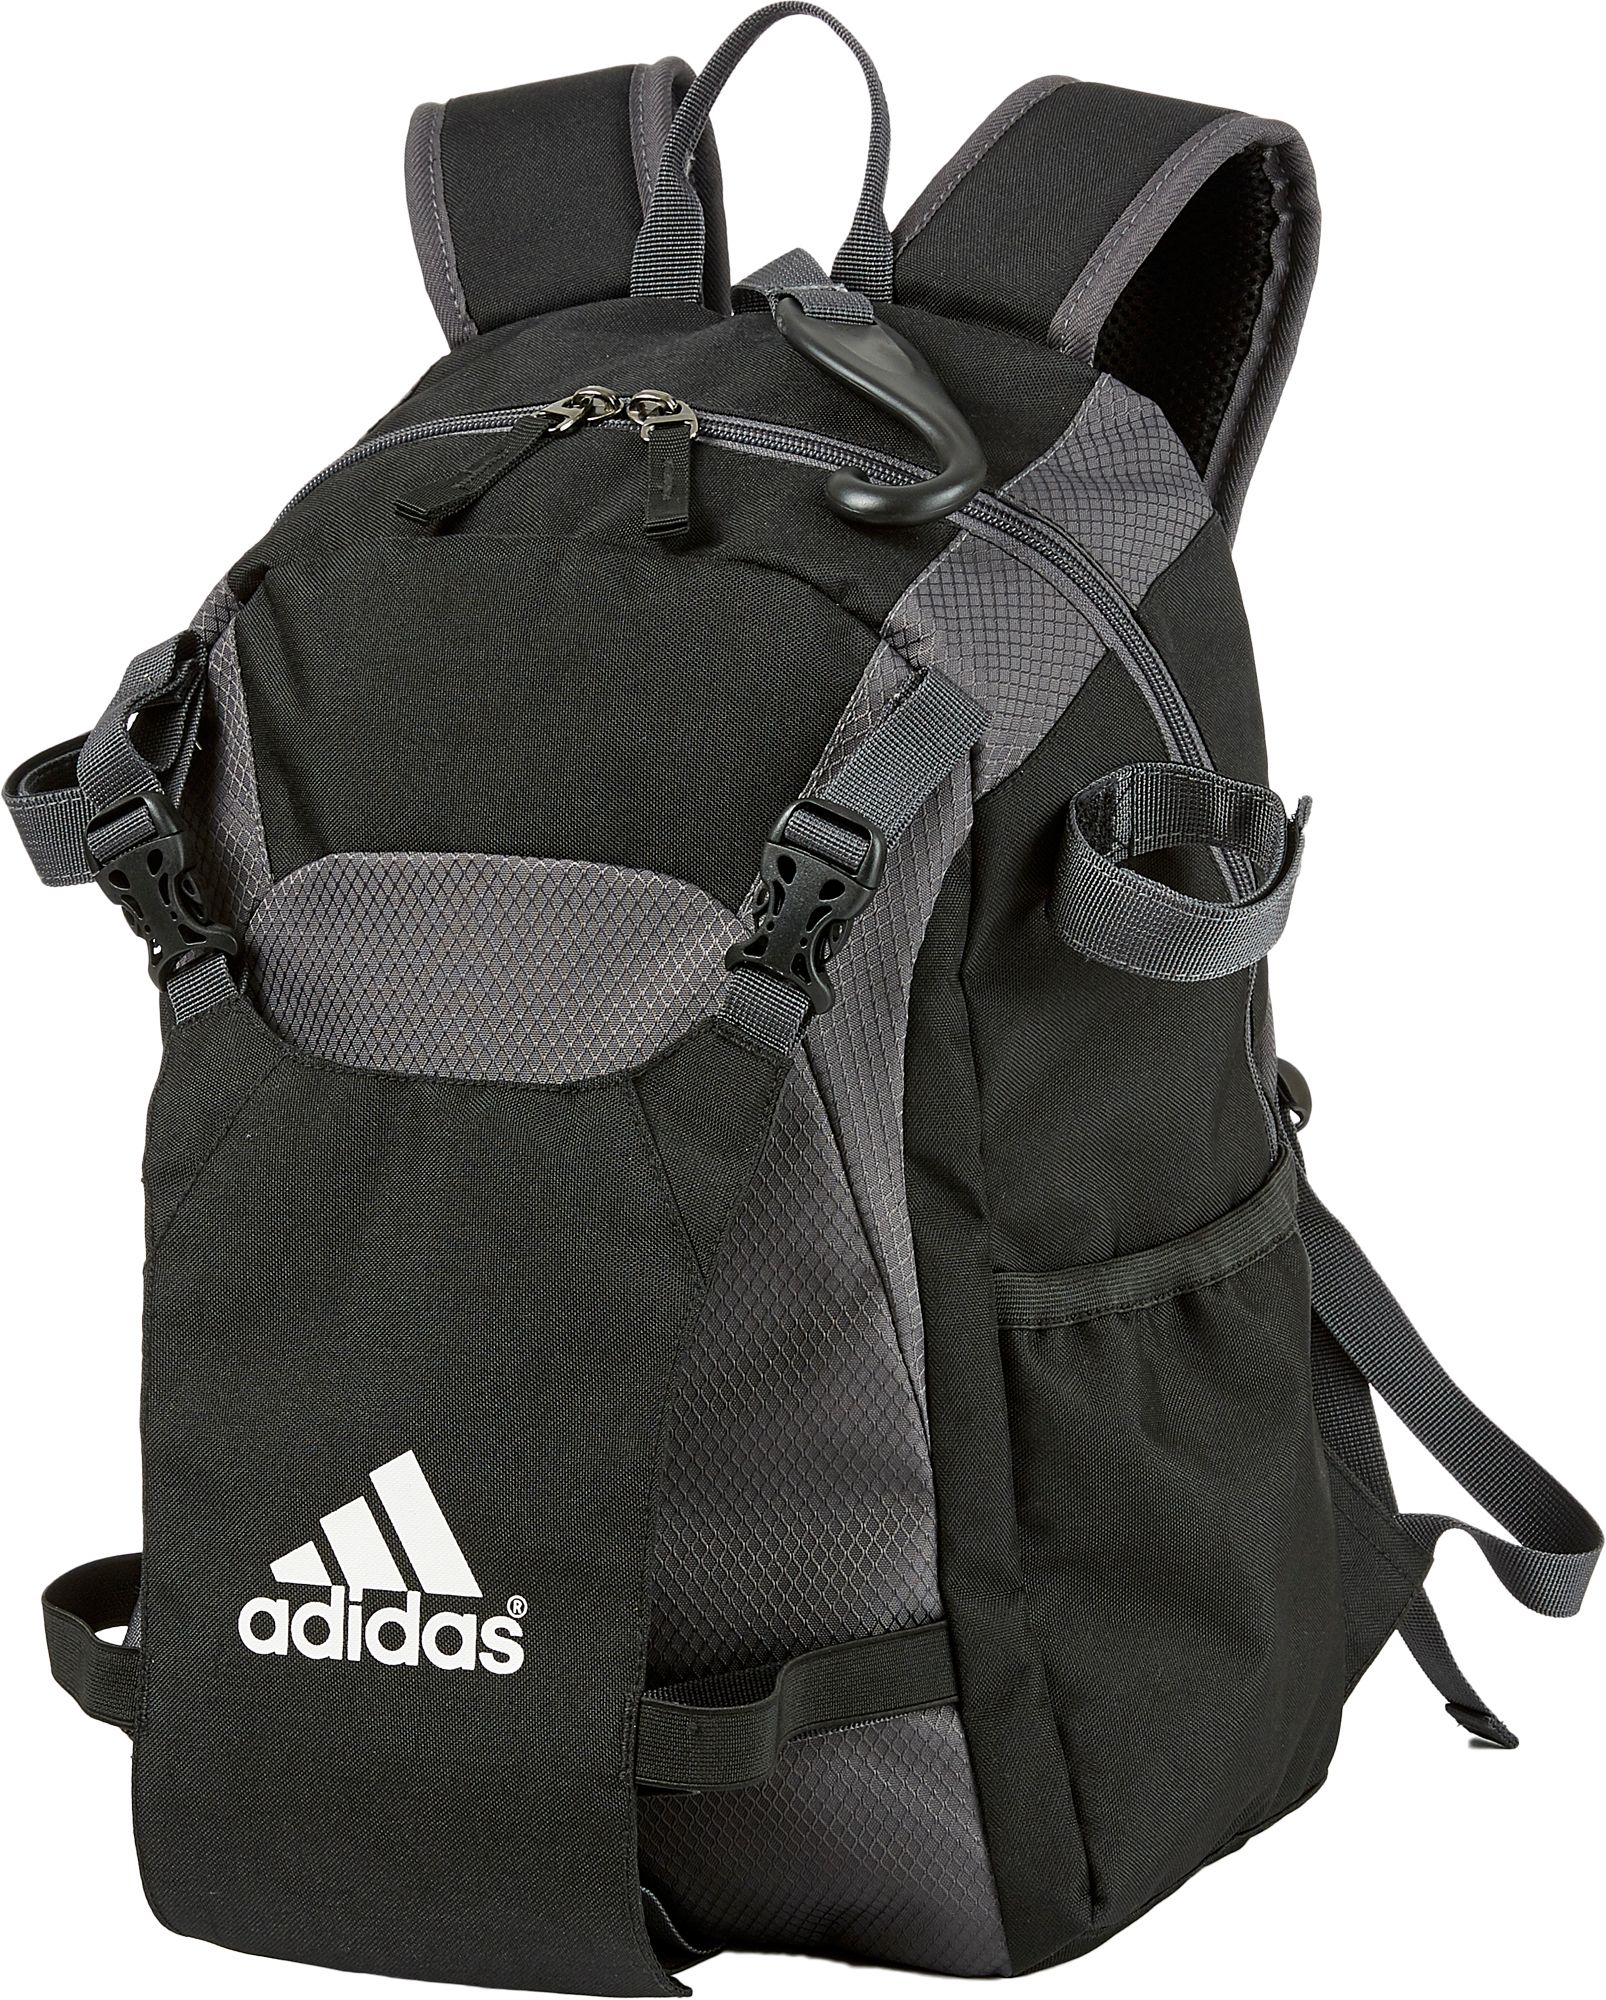 adidas baseball backpack